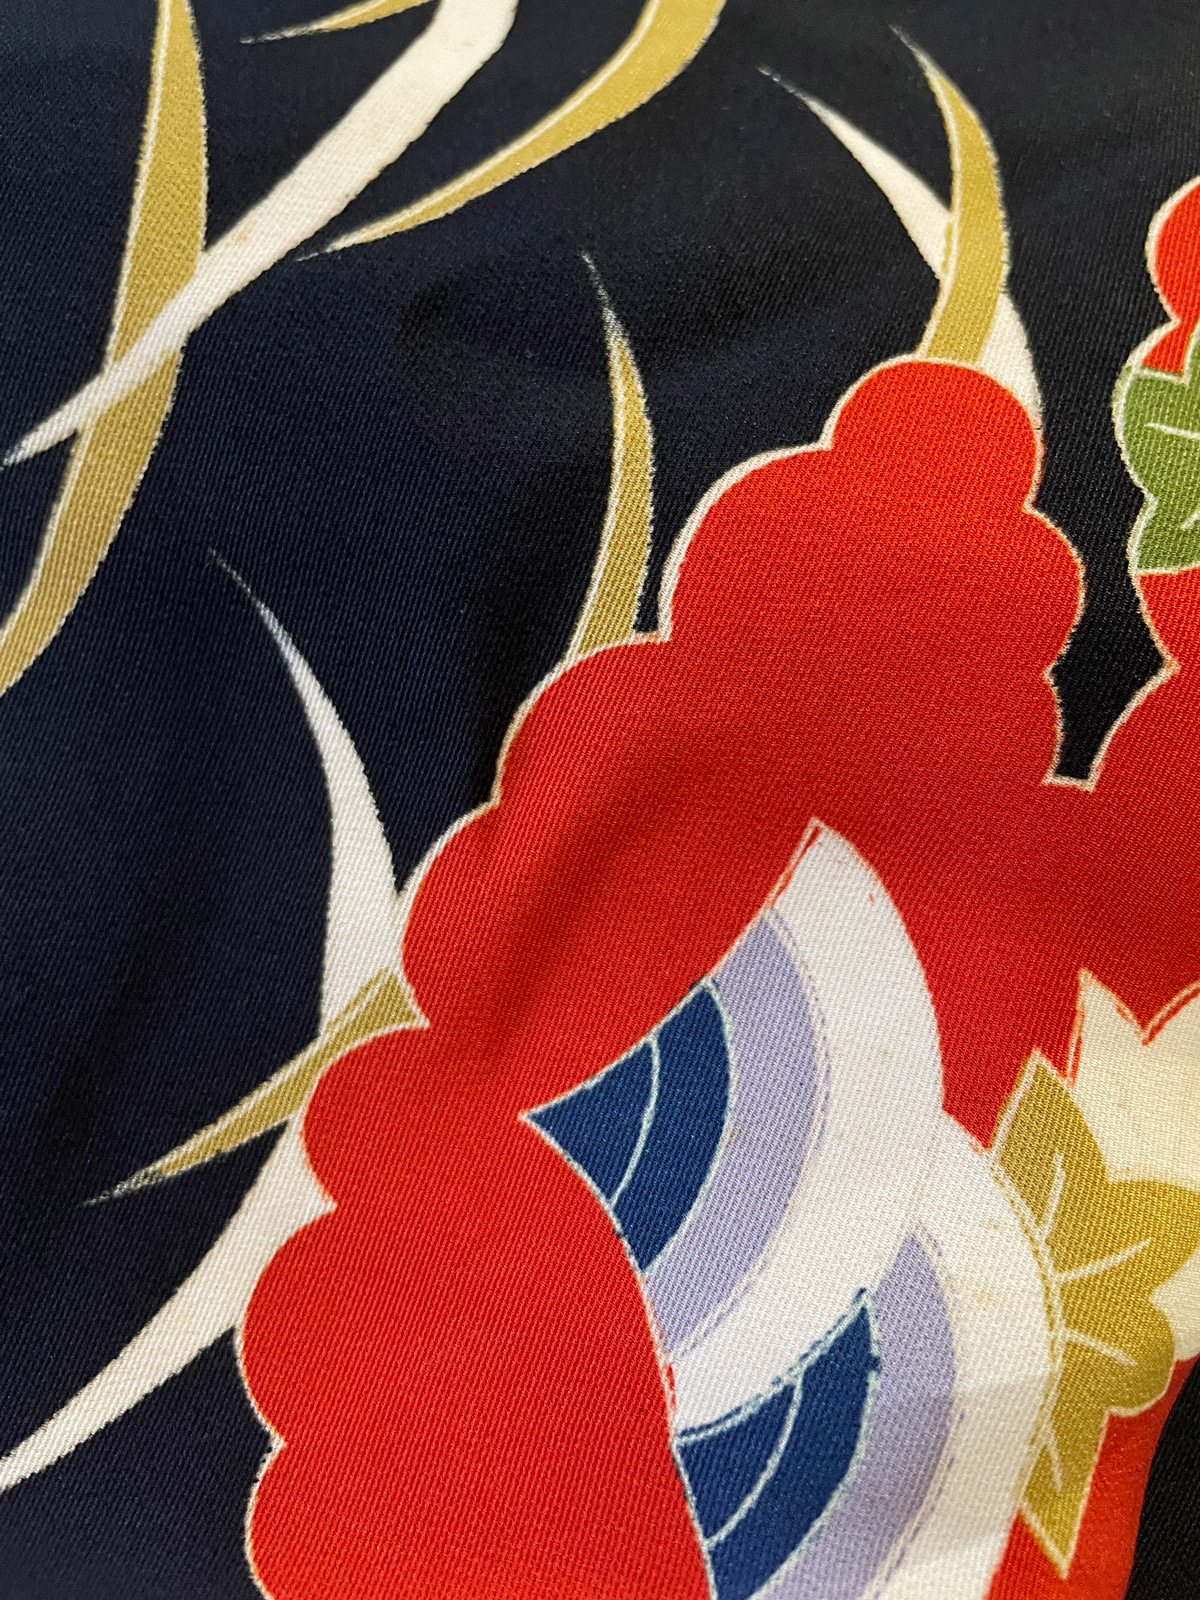 Chiyoko – black silk Haori (Kimono jacket) with colorful design